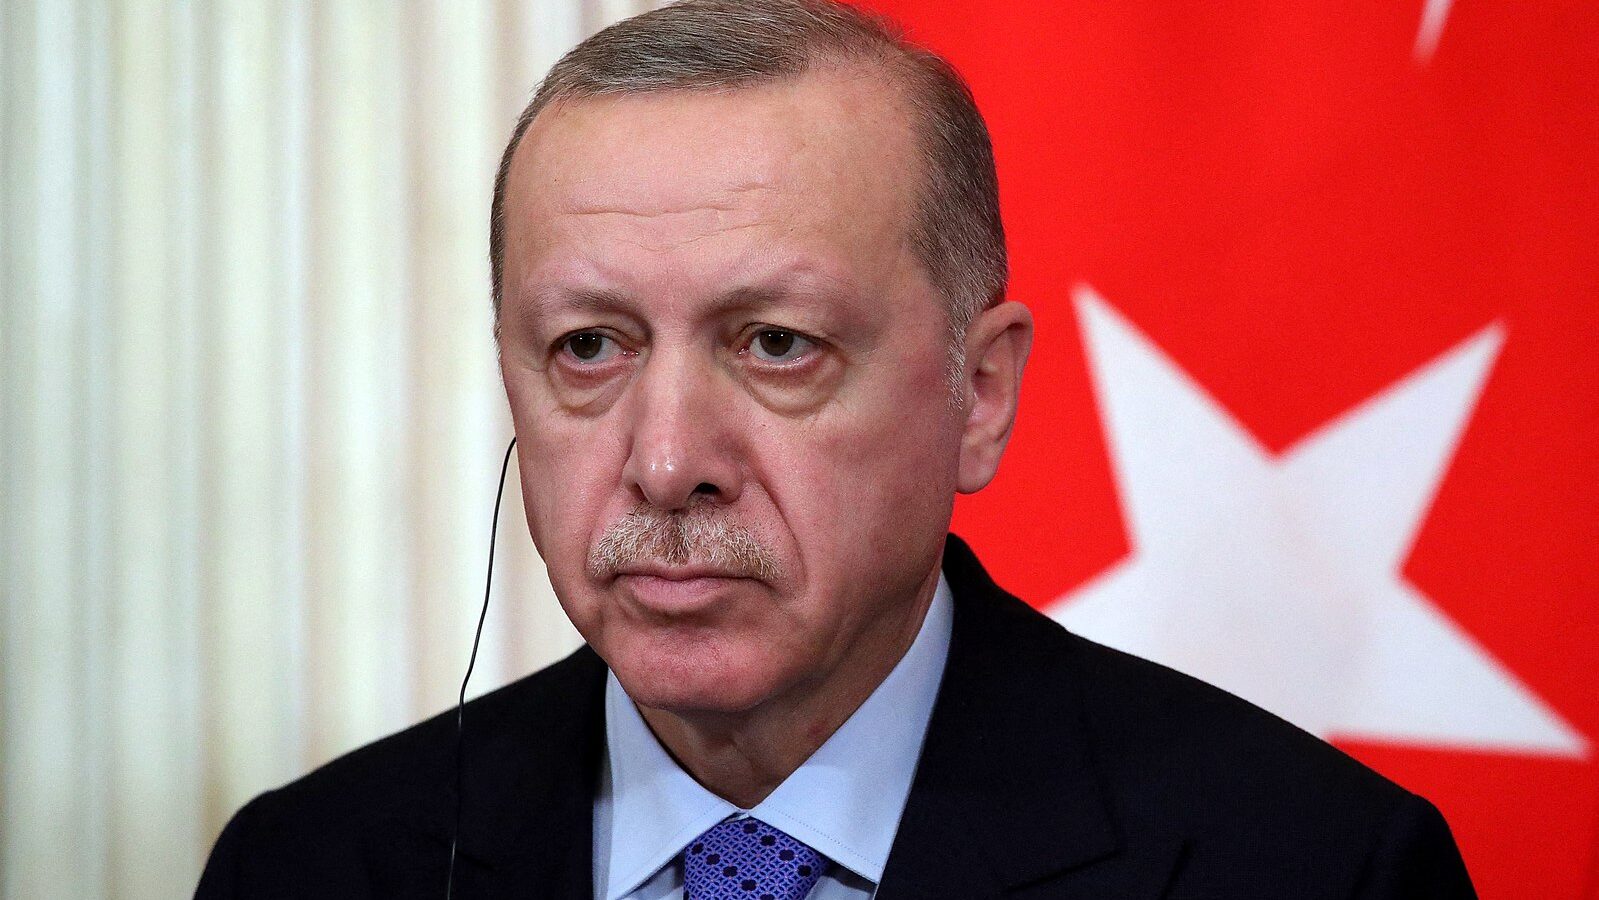 Erdogan to host Hamas leader for talks as Mideast crisis deepens